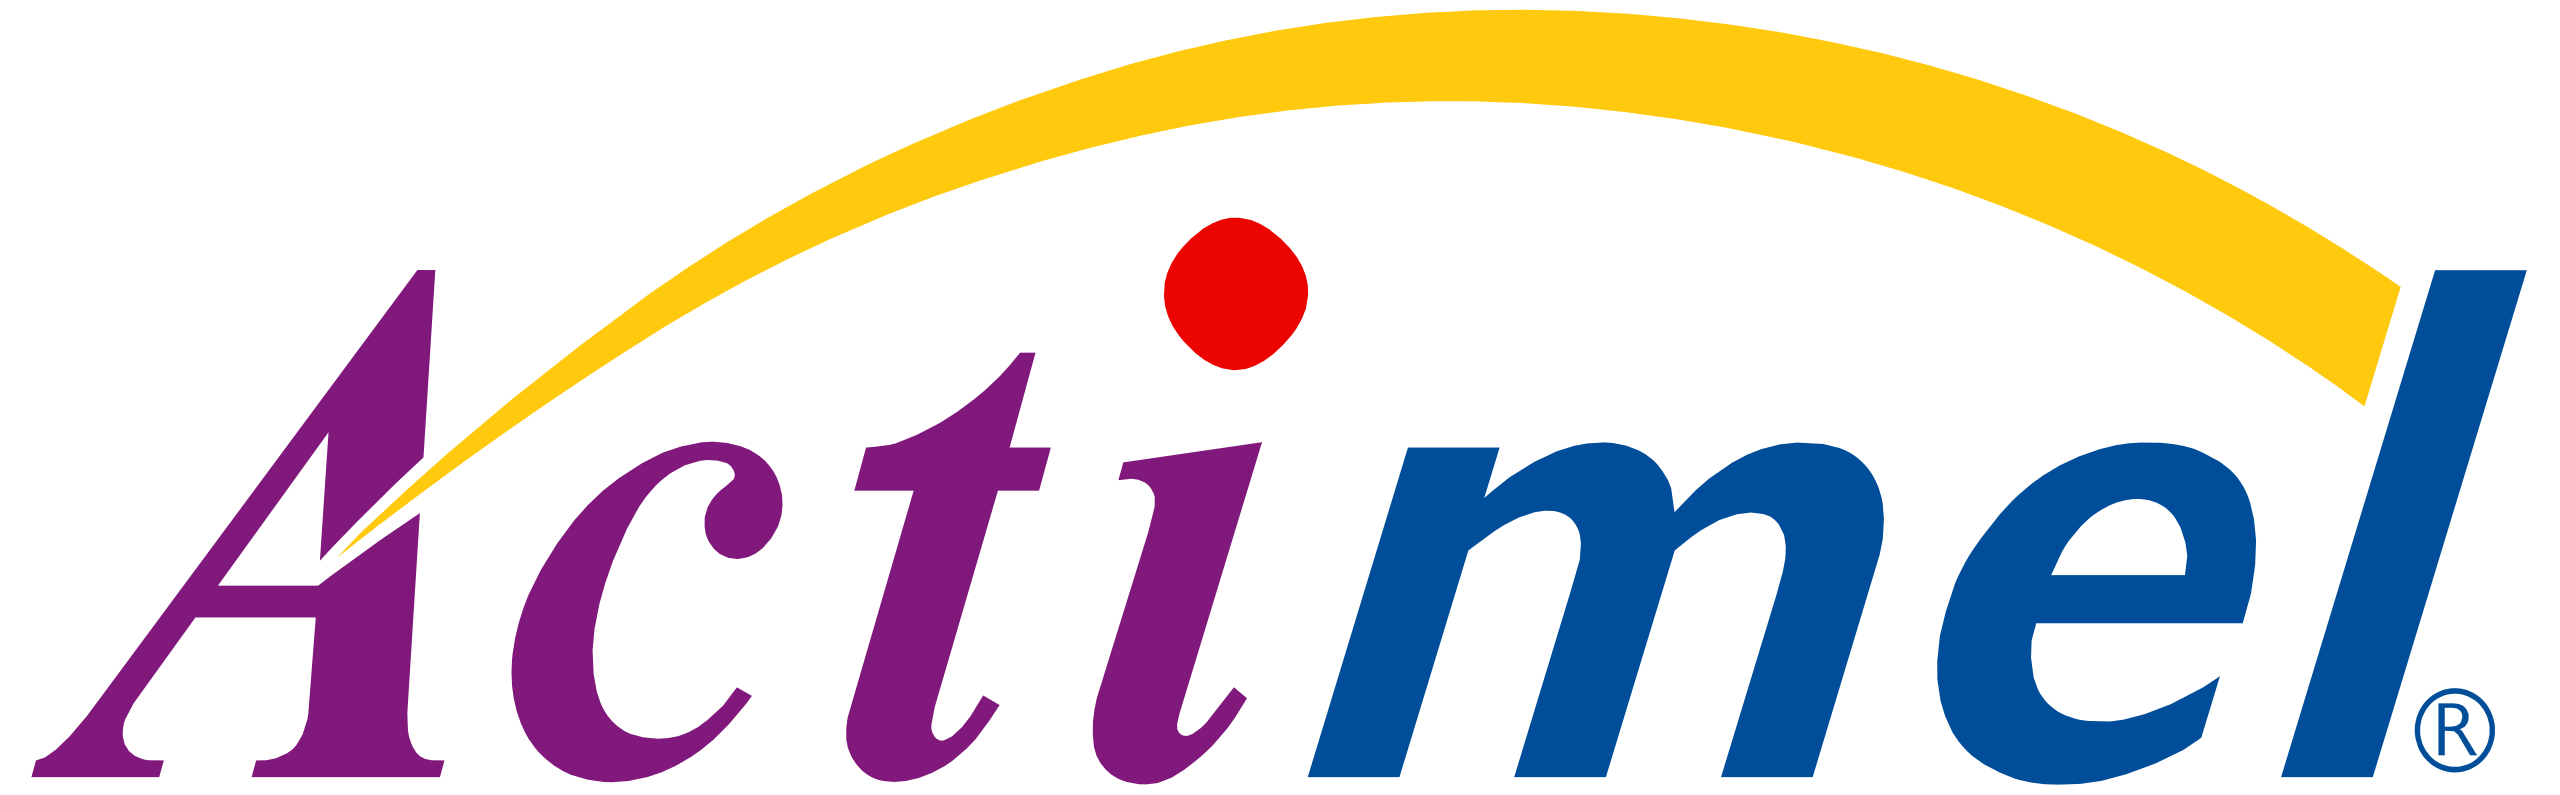 File:Actimel Logo.png - Wikipedia